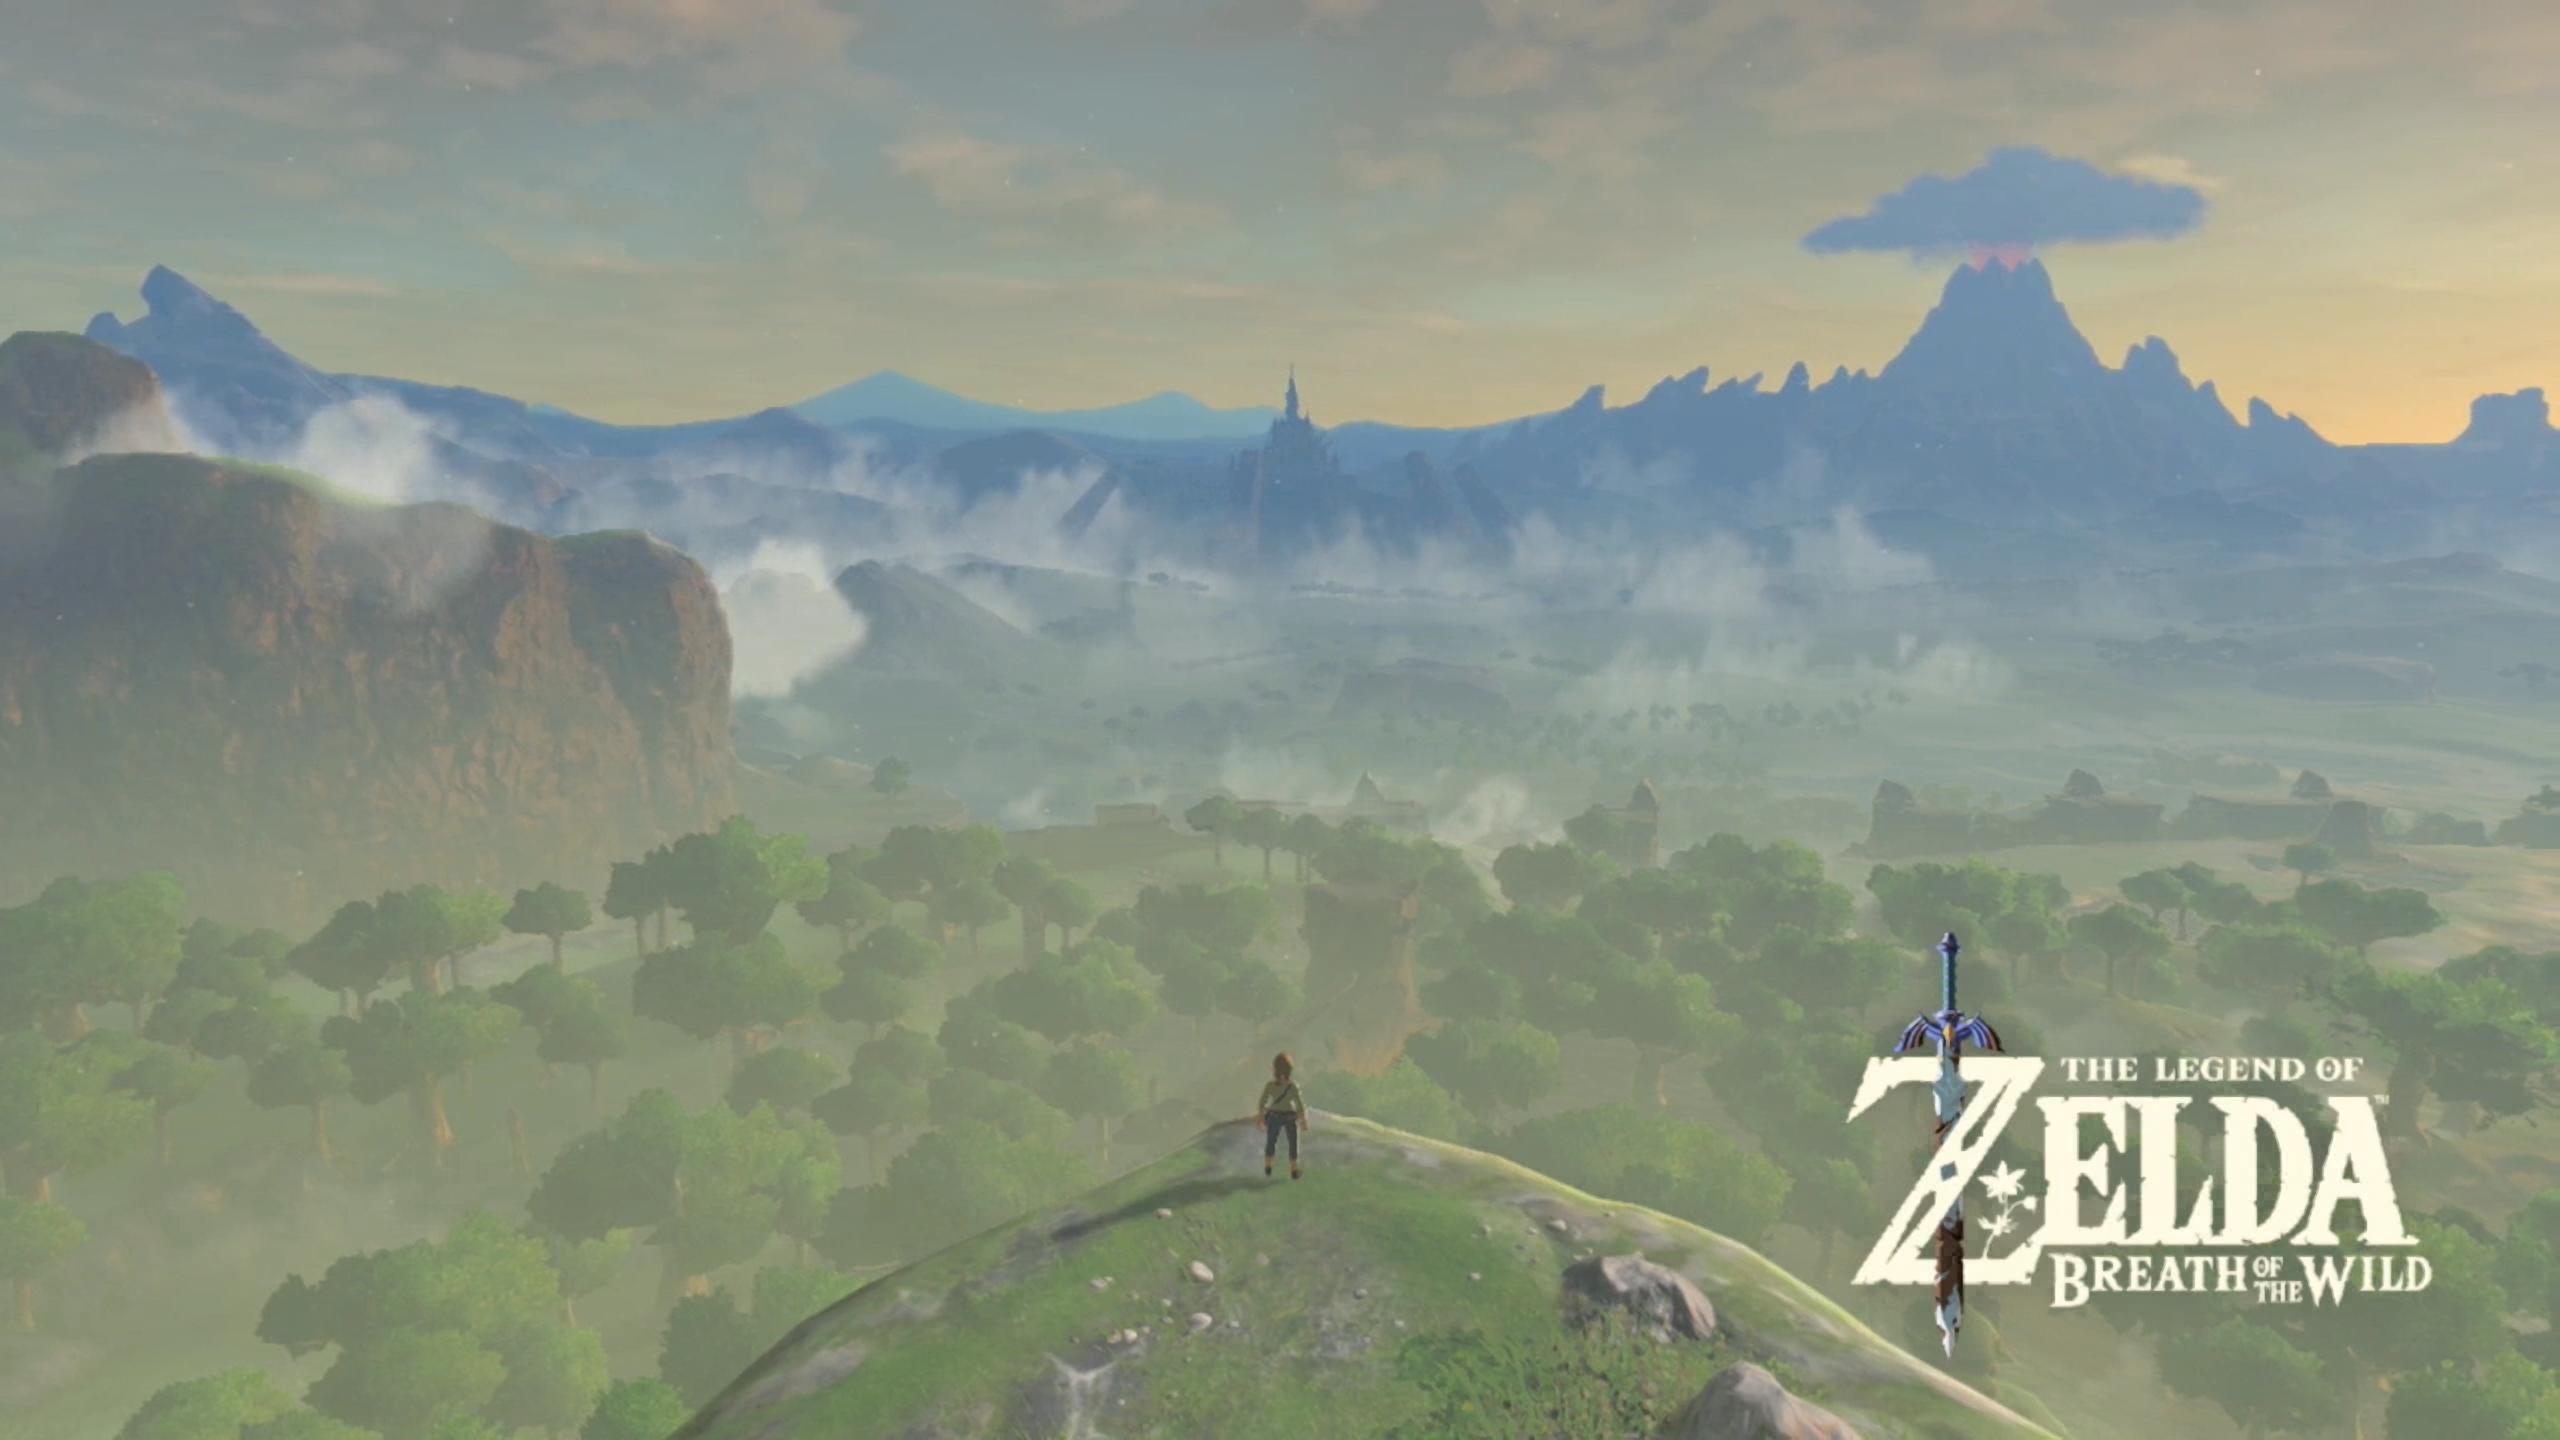 The Legend of Zelda: Breath of the Wild Wallpaper Hd: What we